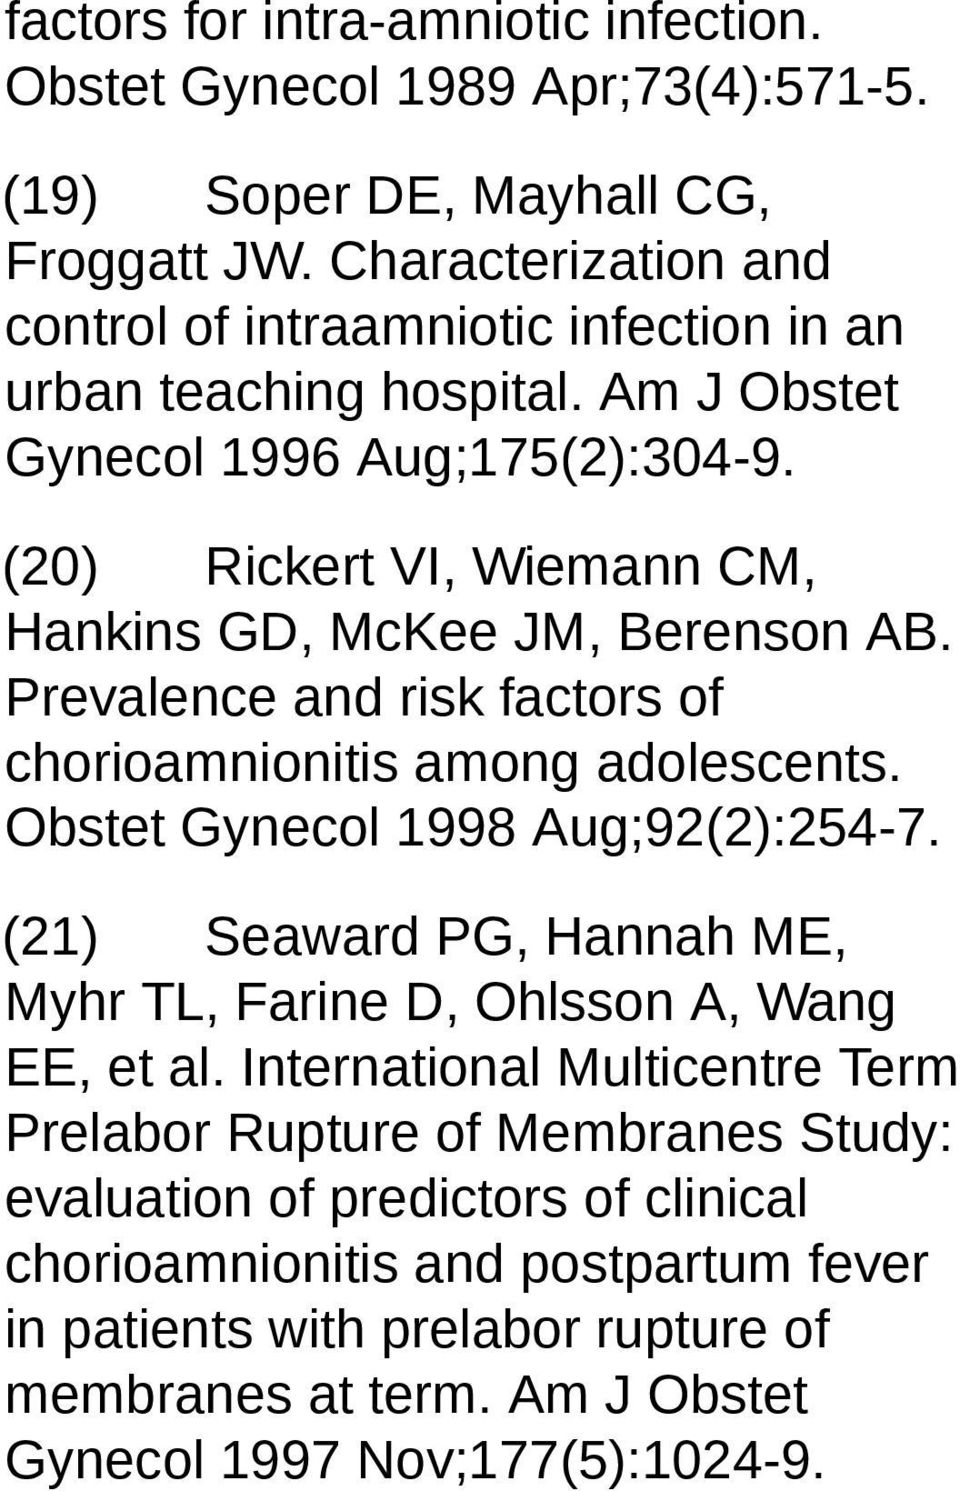 (20) Rickert VI, Wiemann CM, Hankins GD, McKee JM, Berenson AB. Prevalence and risk factors of chorioamnionitis among adolescents. Obstet Gynecol 1998 Aug;92(2):254-7.